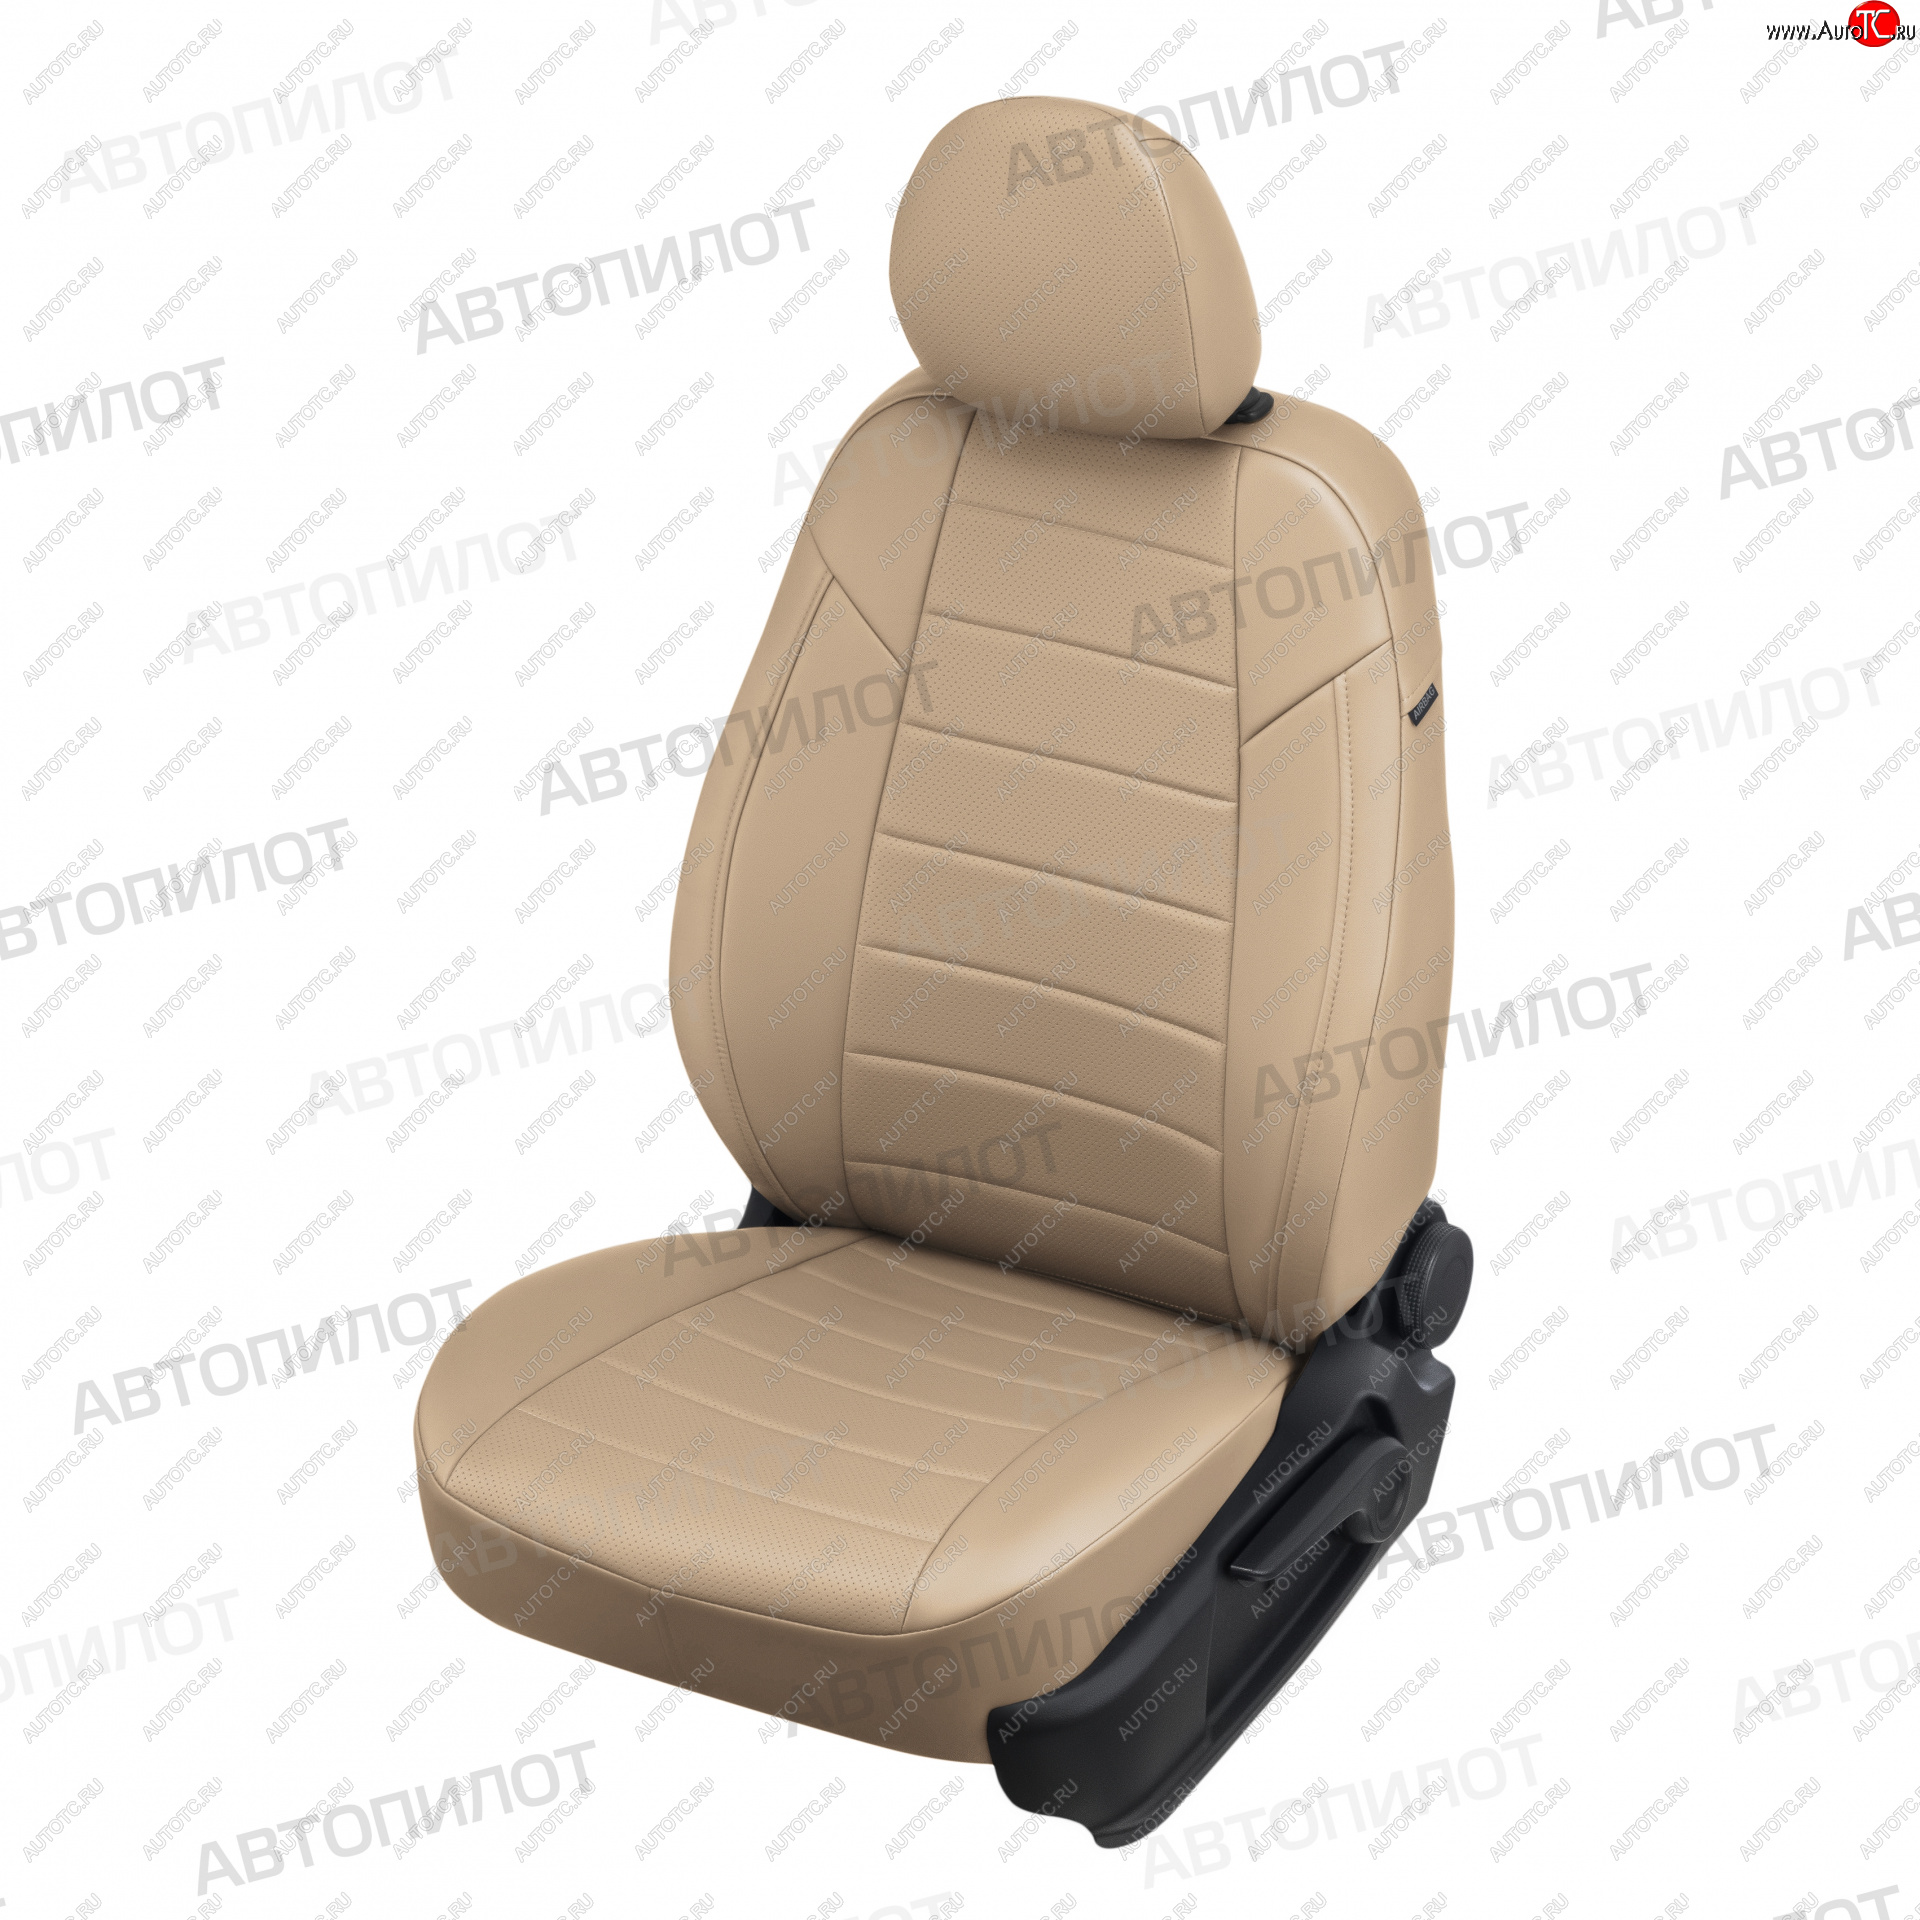 13 849 р. Чехлы сидений (экокожа) Автопилот  Ford Ka  1 (1996-2008) (темно-бежевый)